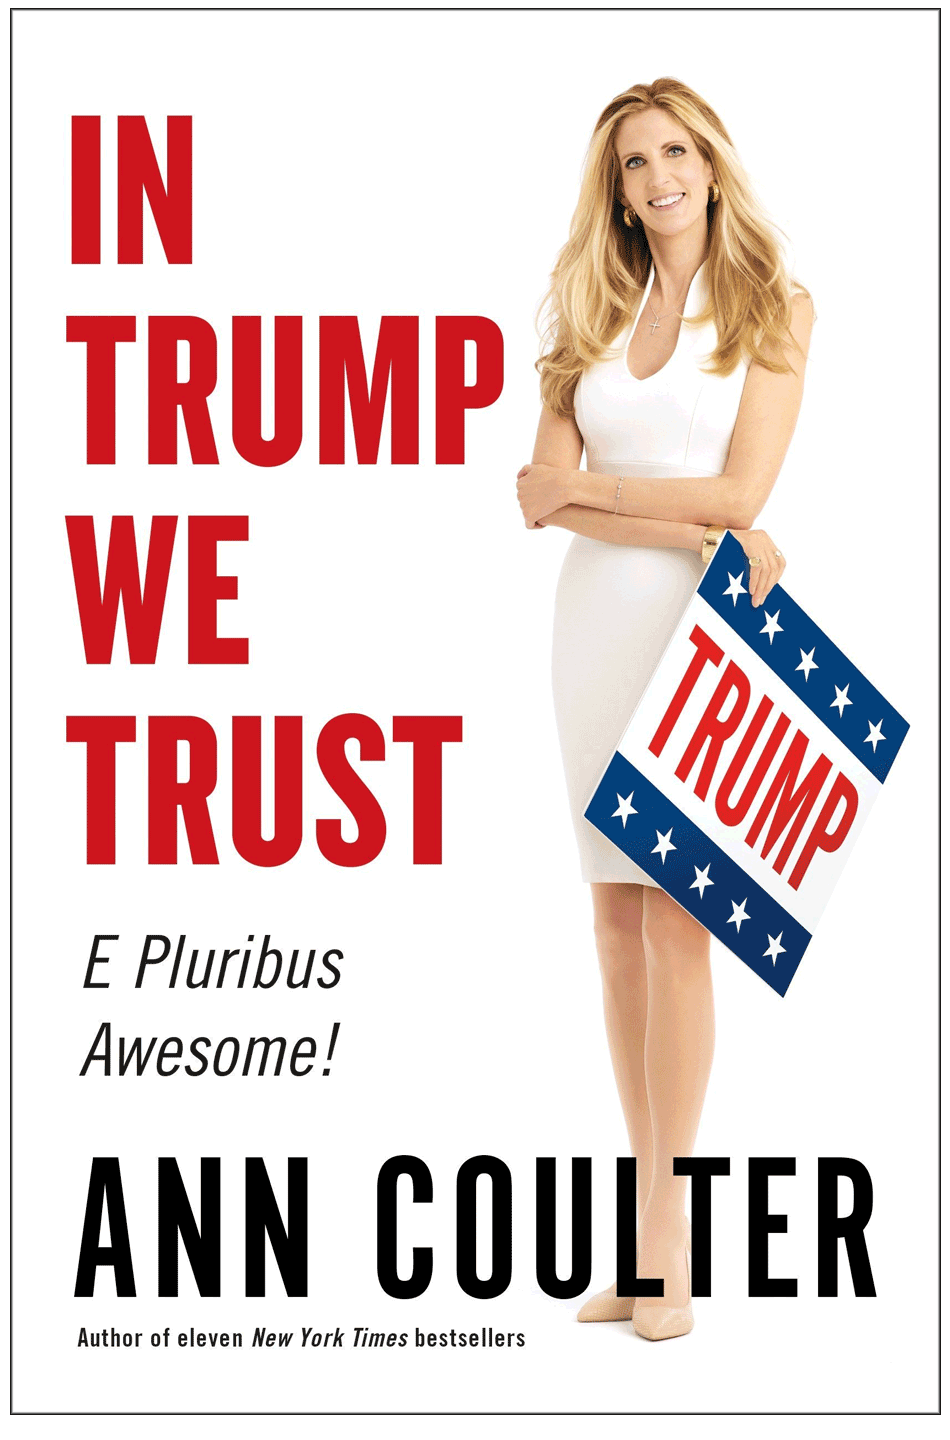 In Trump We Trust. E Pluribus Awesome!